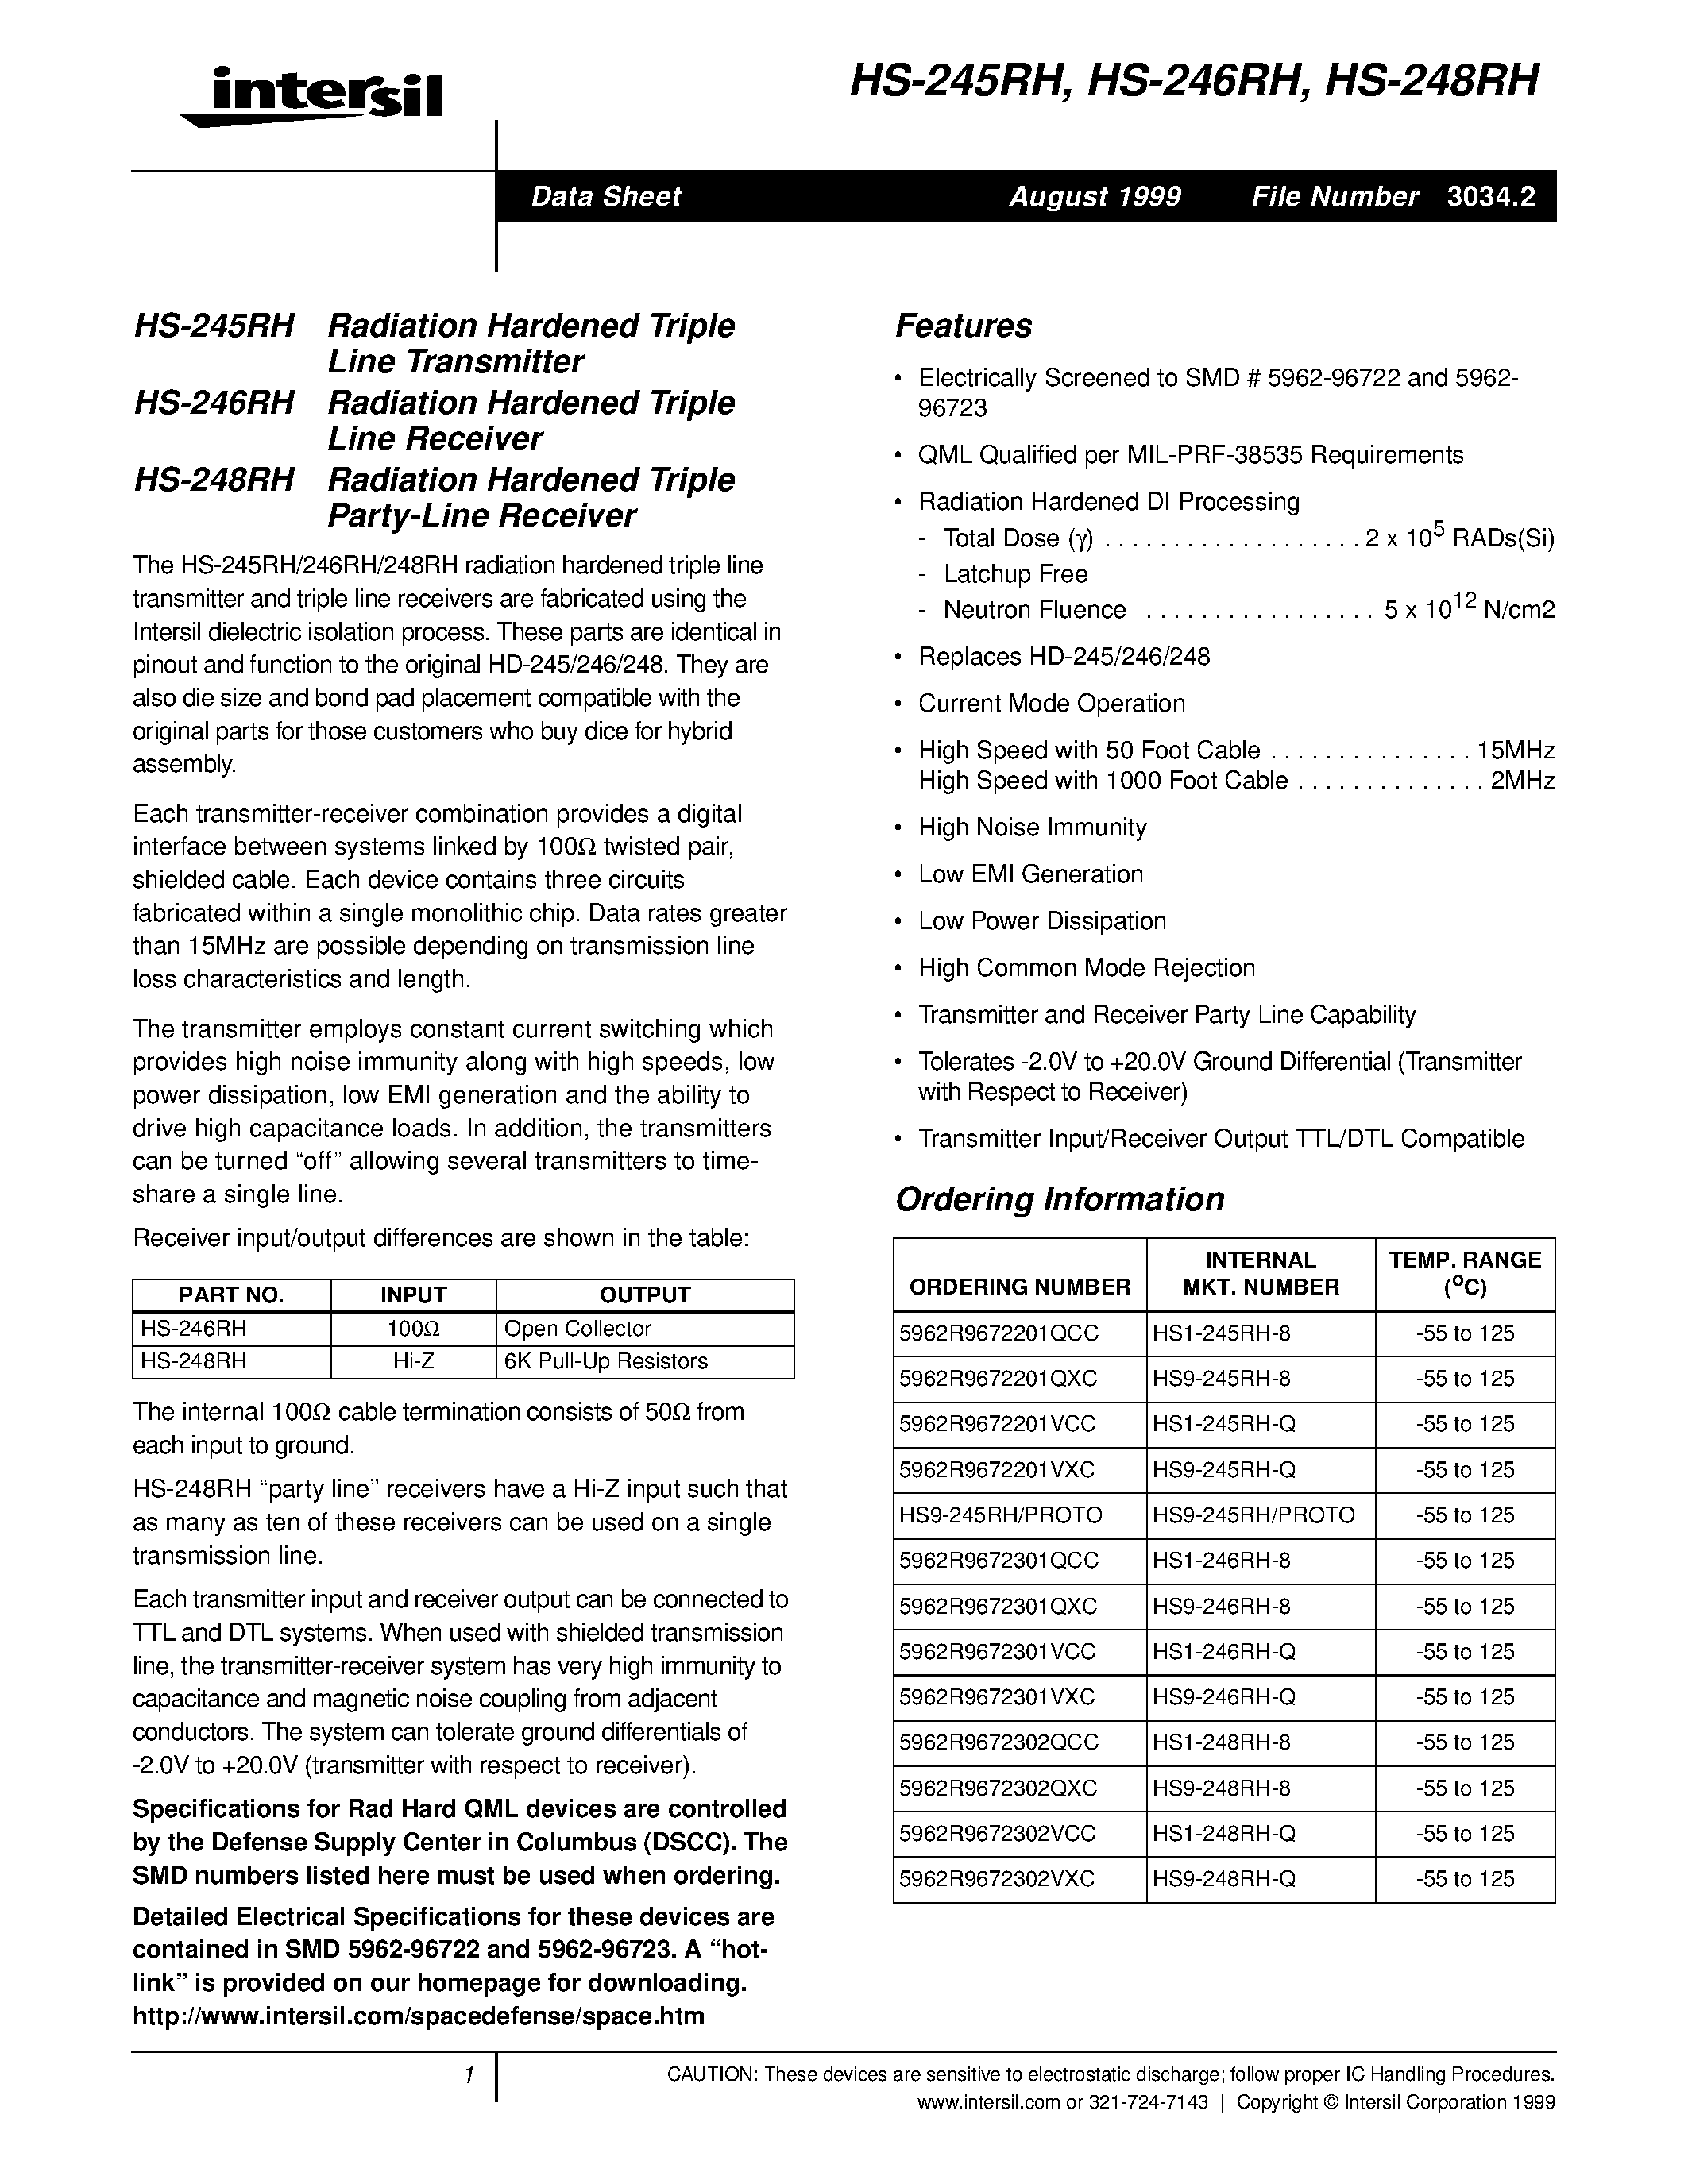 Даташит HS9-245RH - Radiation Hardened Triple Line(party-Line) Transmitter страница 1